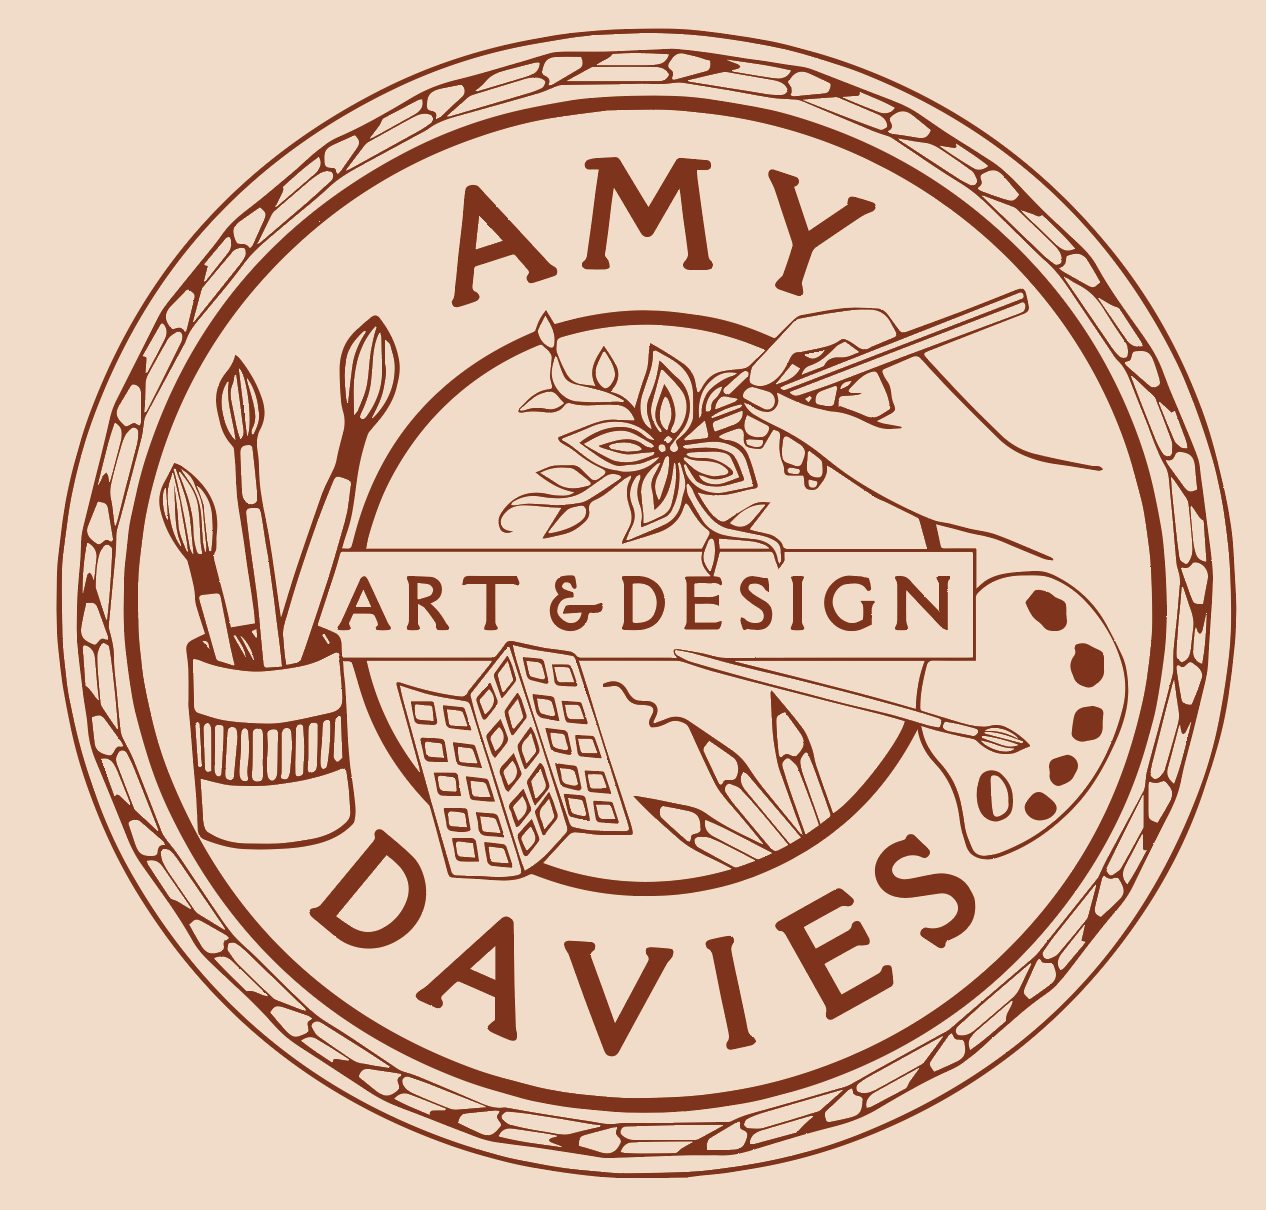 Amy Davies